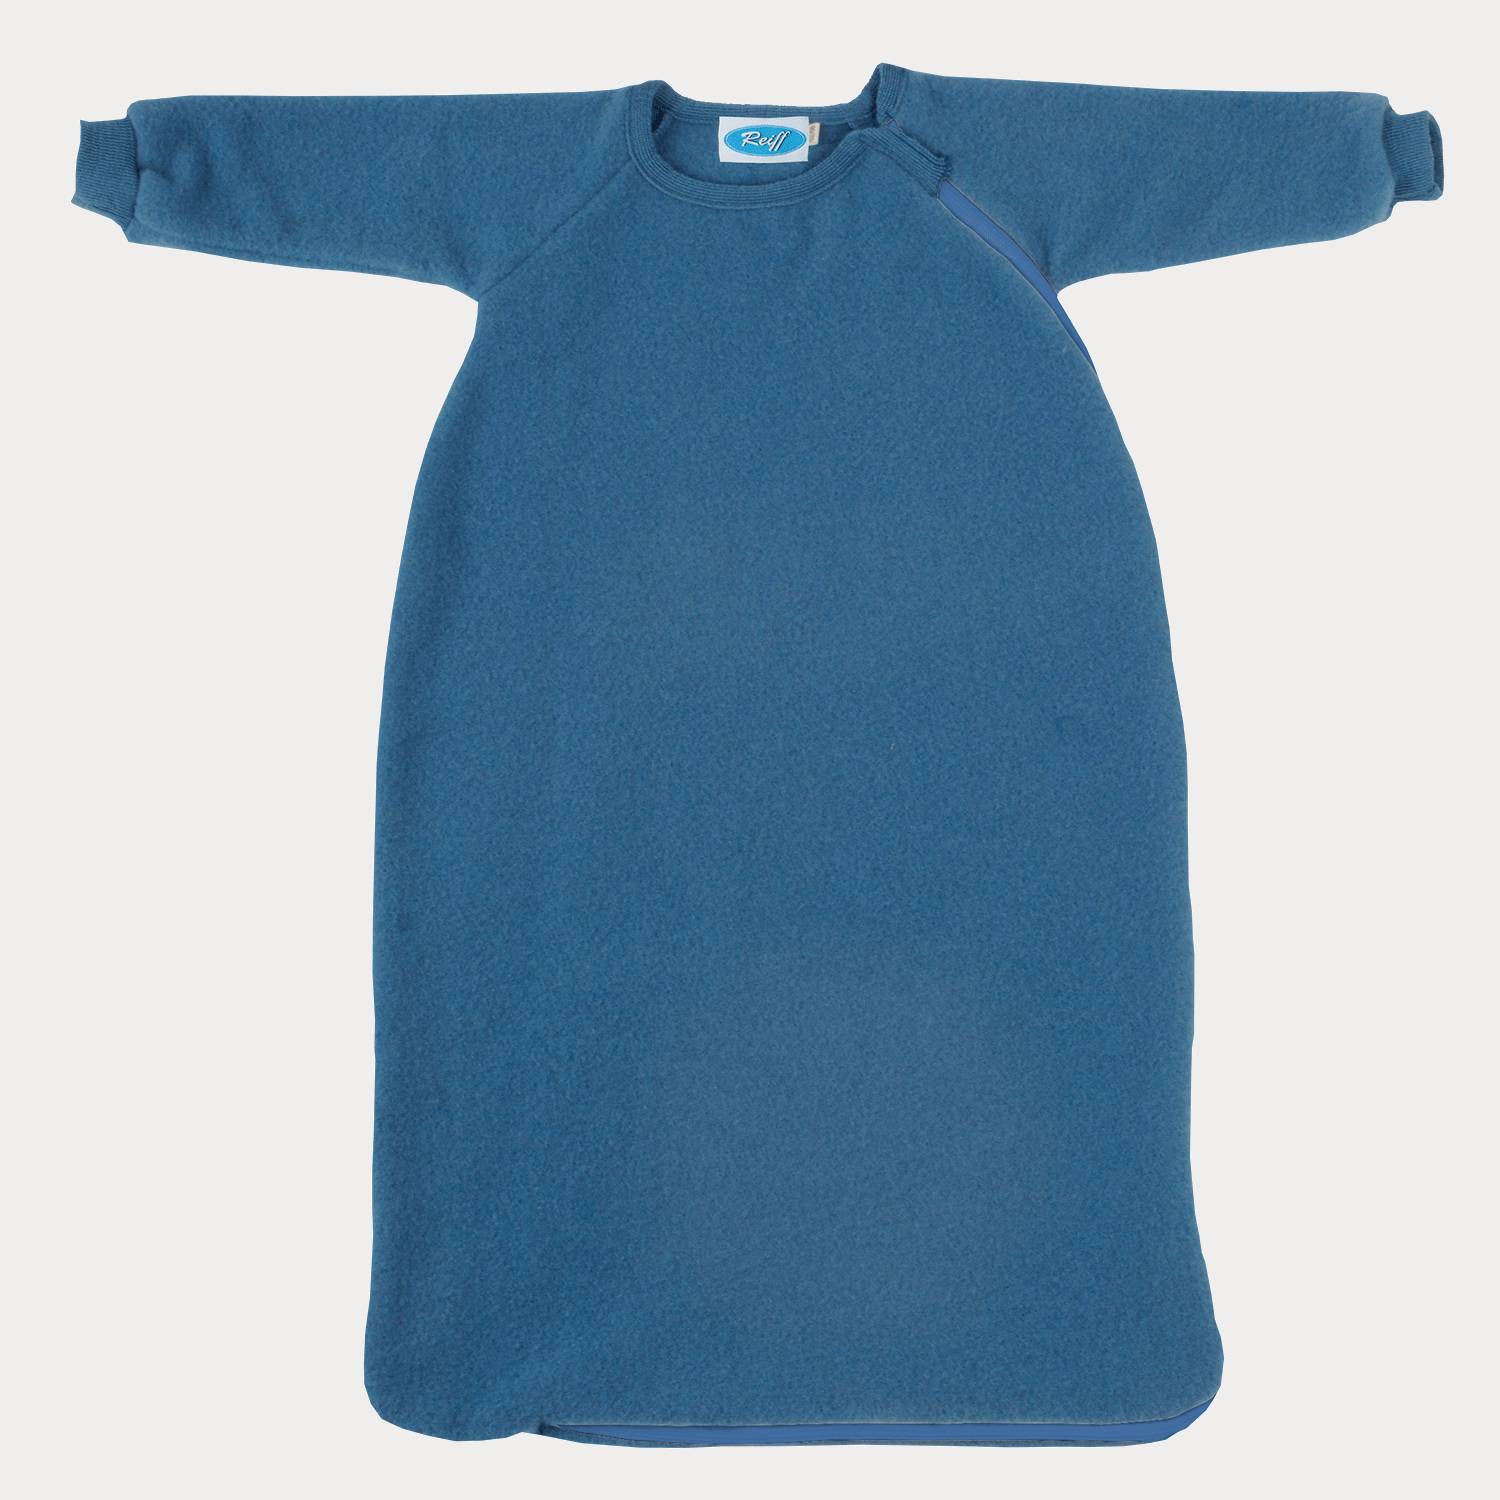 Merino Wool Fleece Sleeping Bag with Arms | Baby sleeping bag in 100% ...